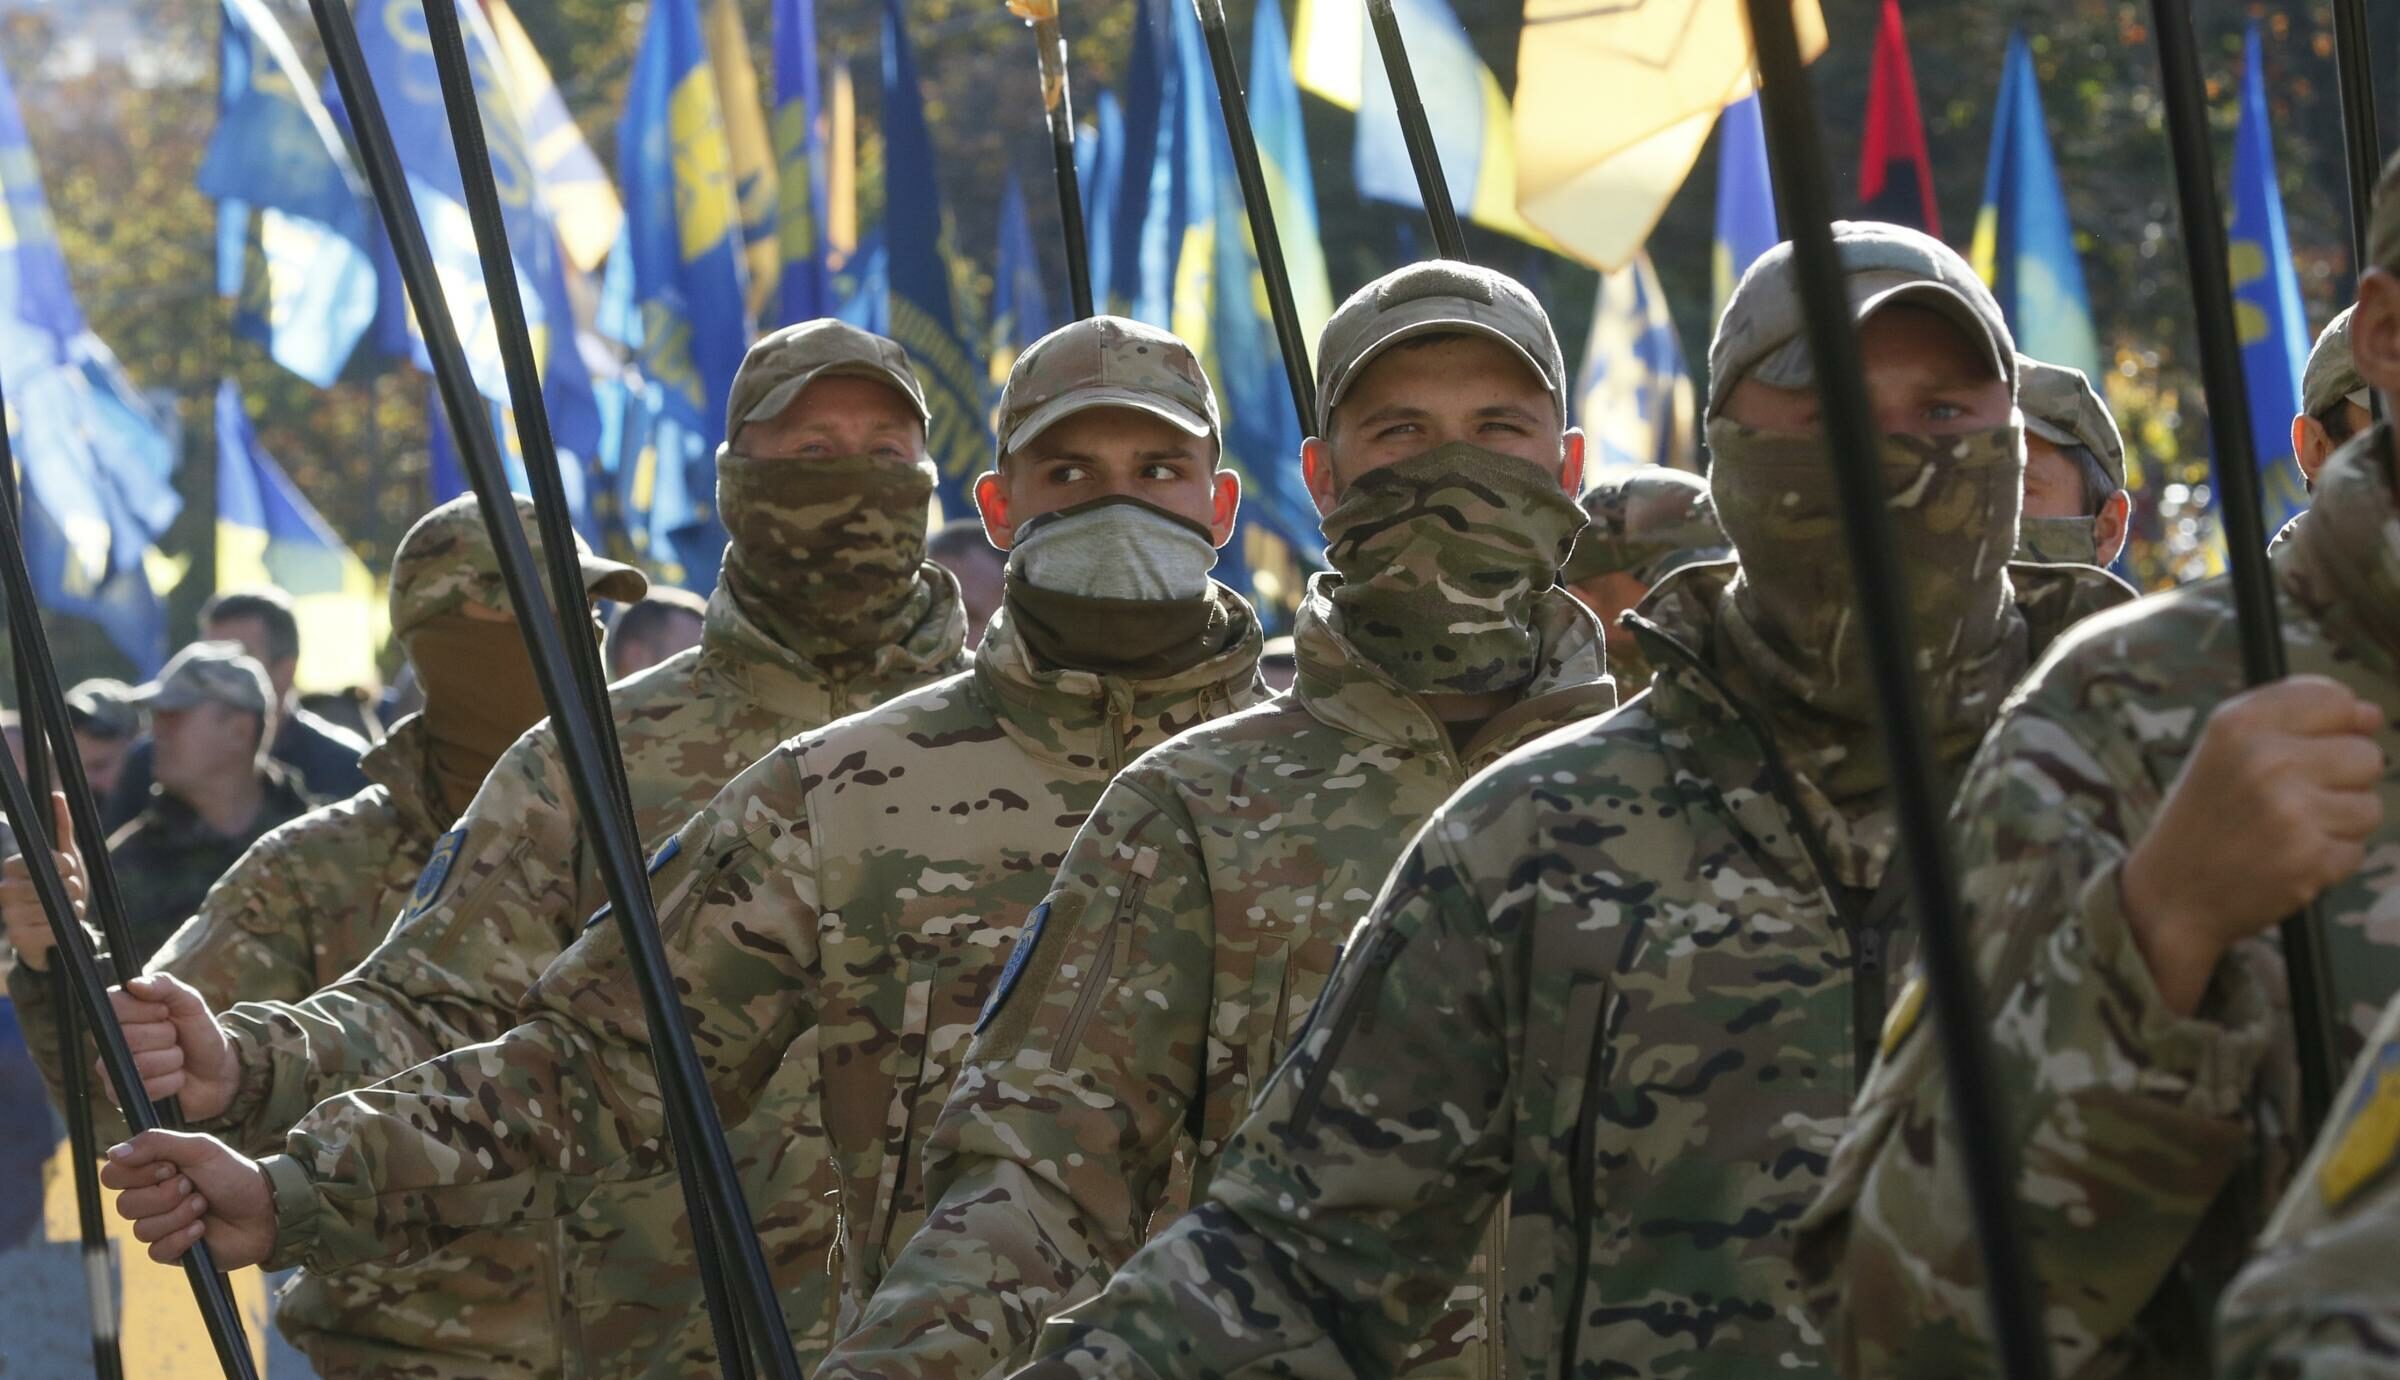 Veterani in Ucraina (La Presse)